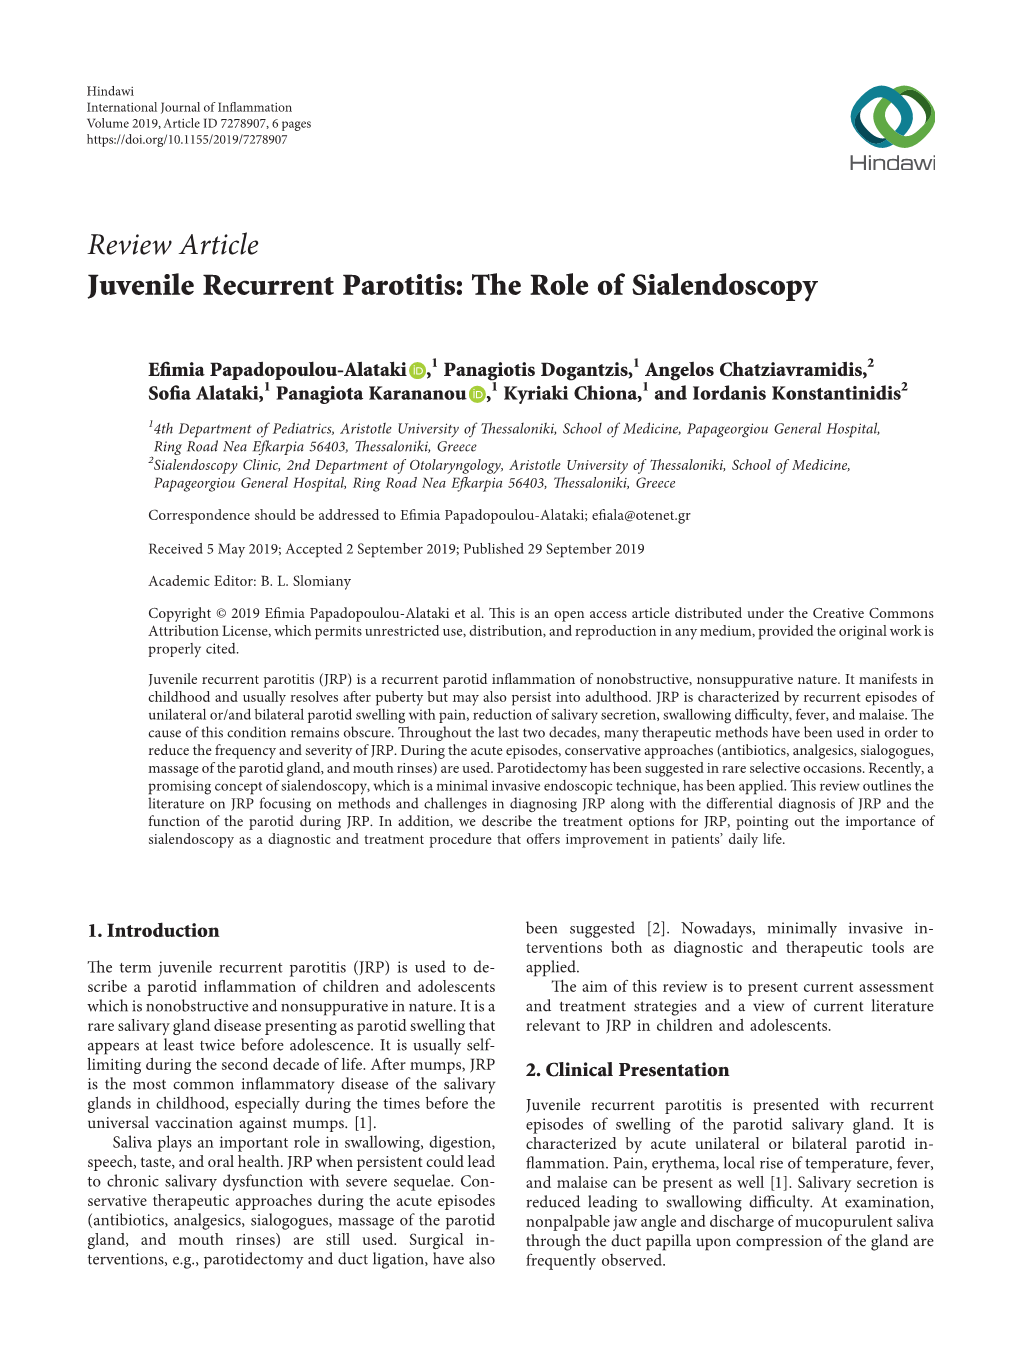 Juvenile Recurrent Parotitis: the Role of Sialendoscopy